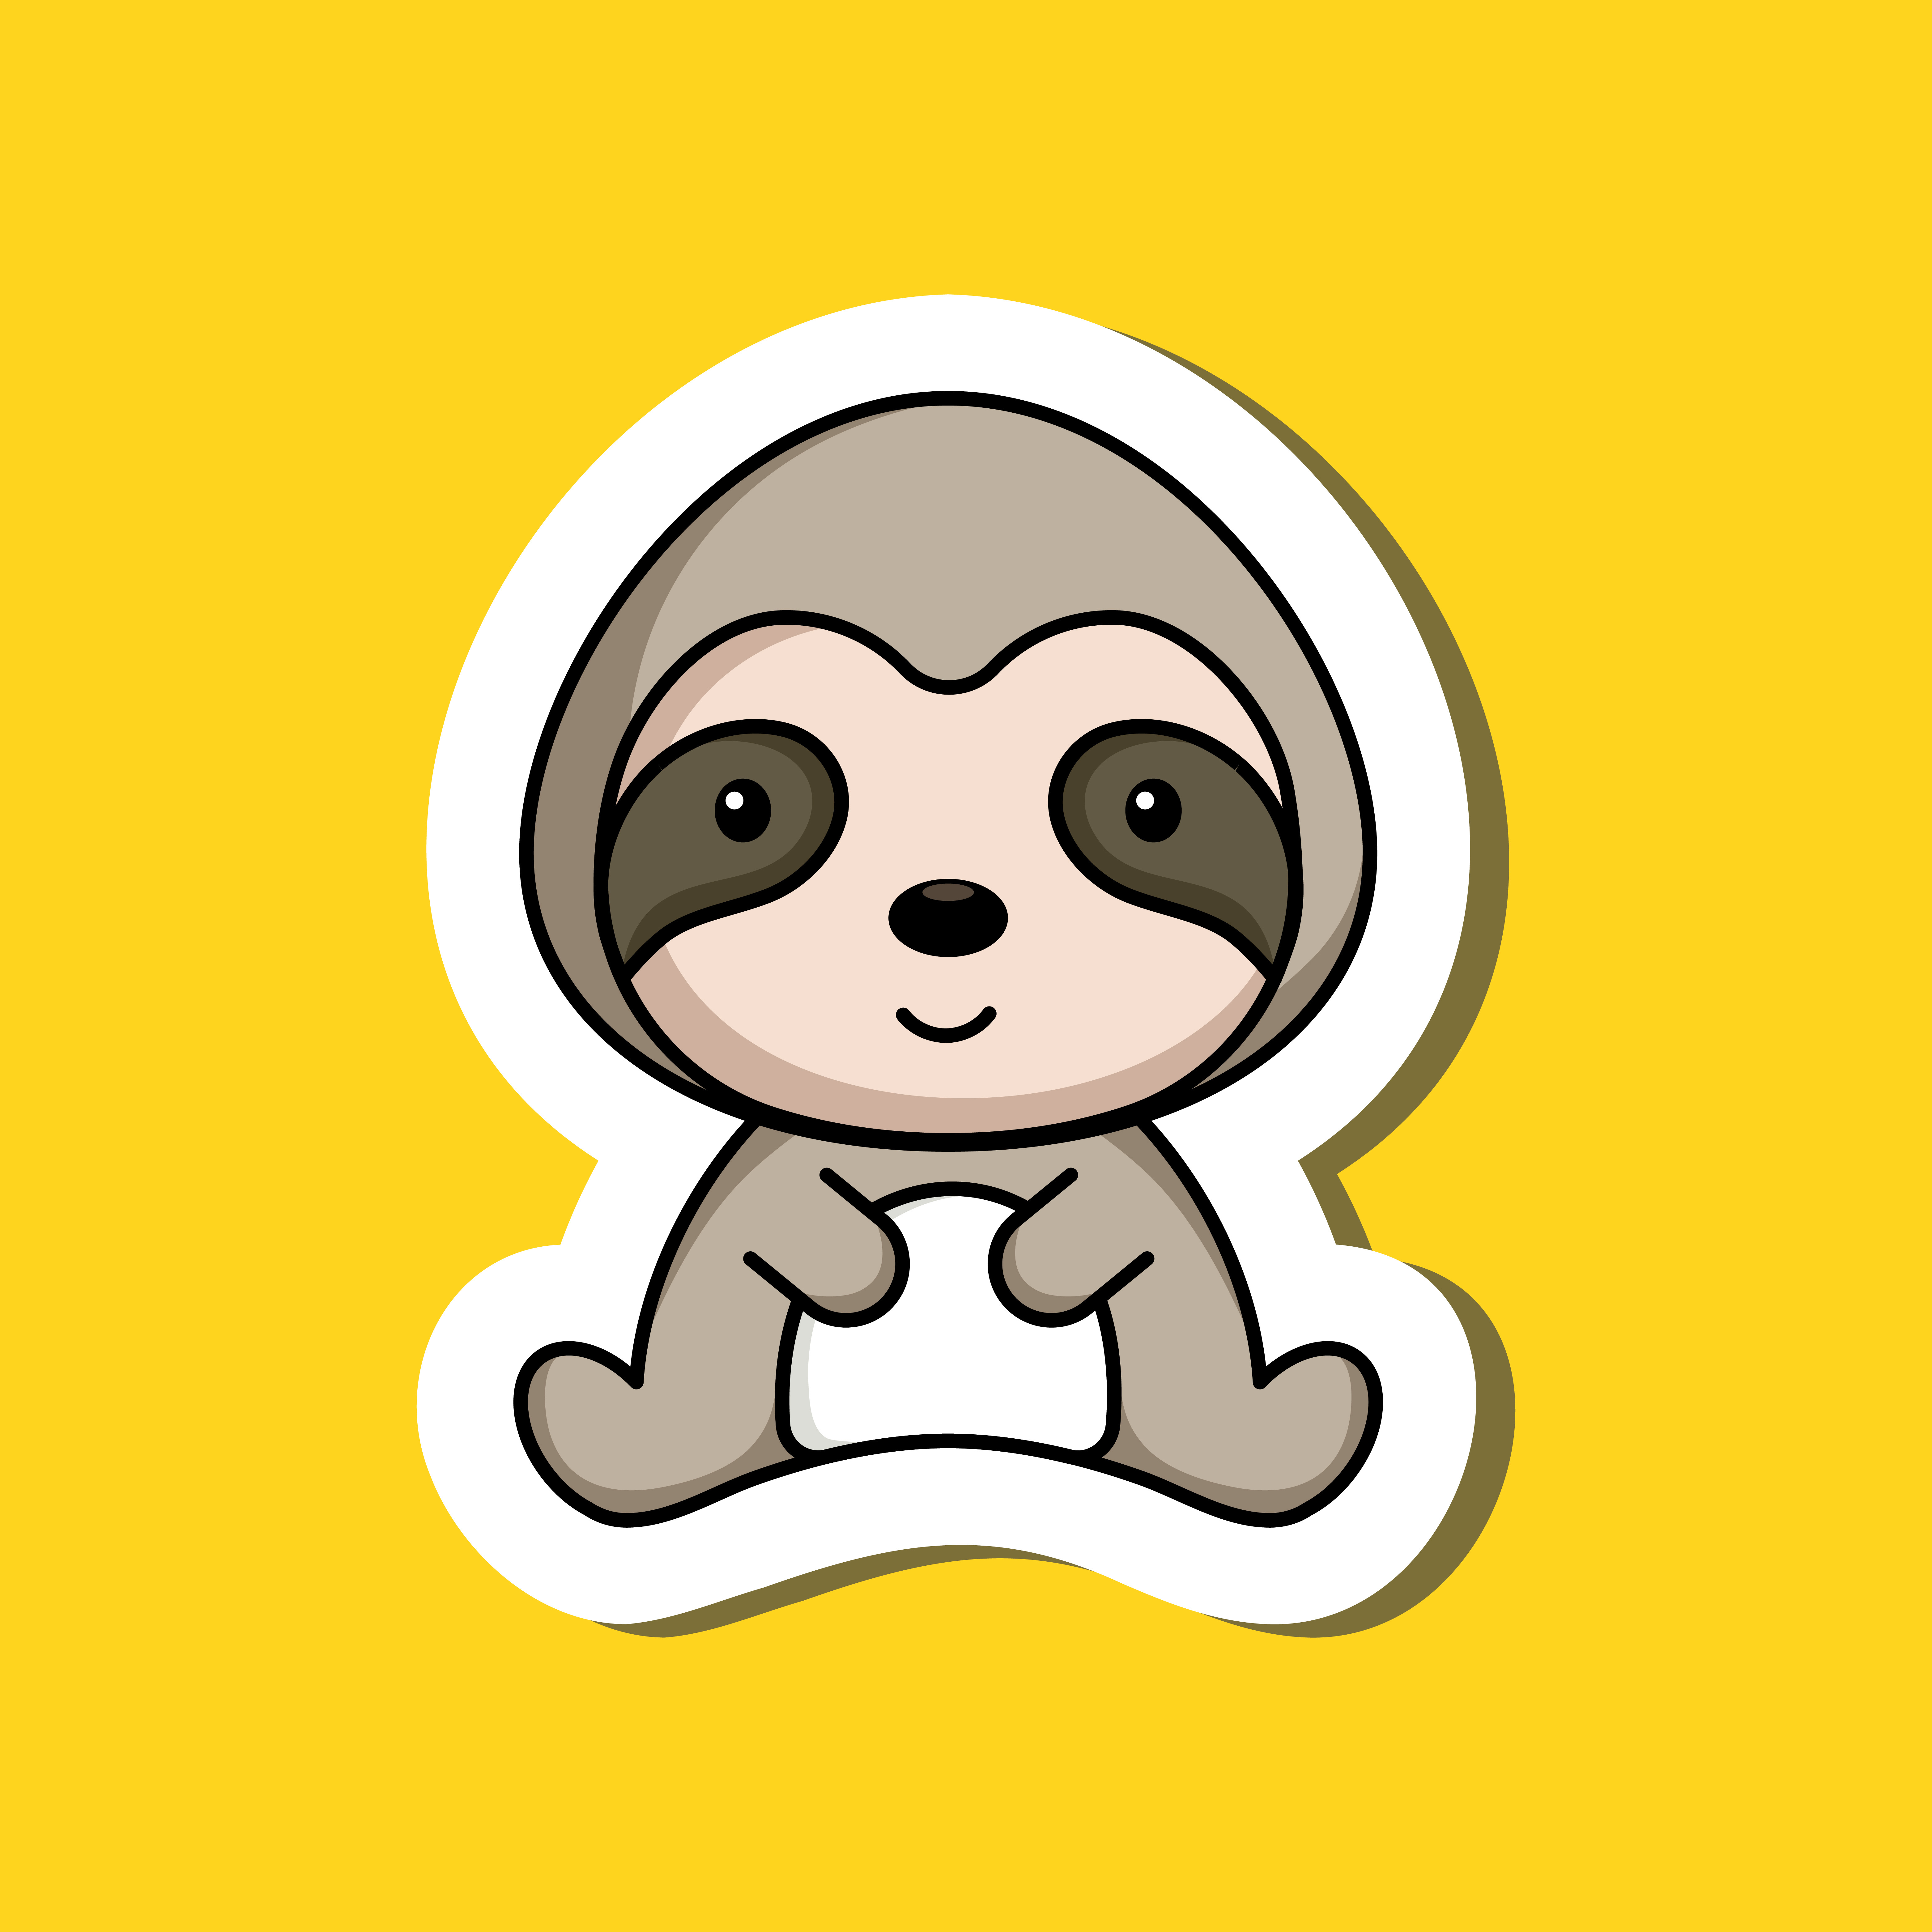 Cute cartoon sticker little sloth logo template. Mascot animal character design of album, scrapbook, greeting card, invitation, flyer, sticker, card. Vector stock illustration.